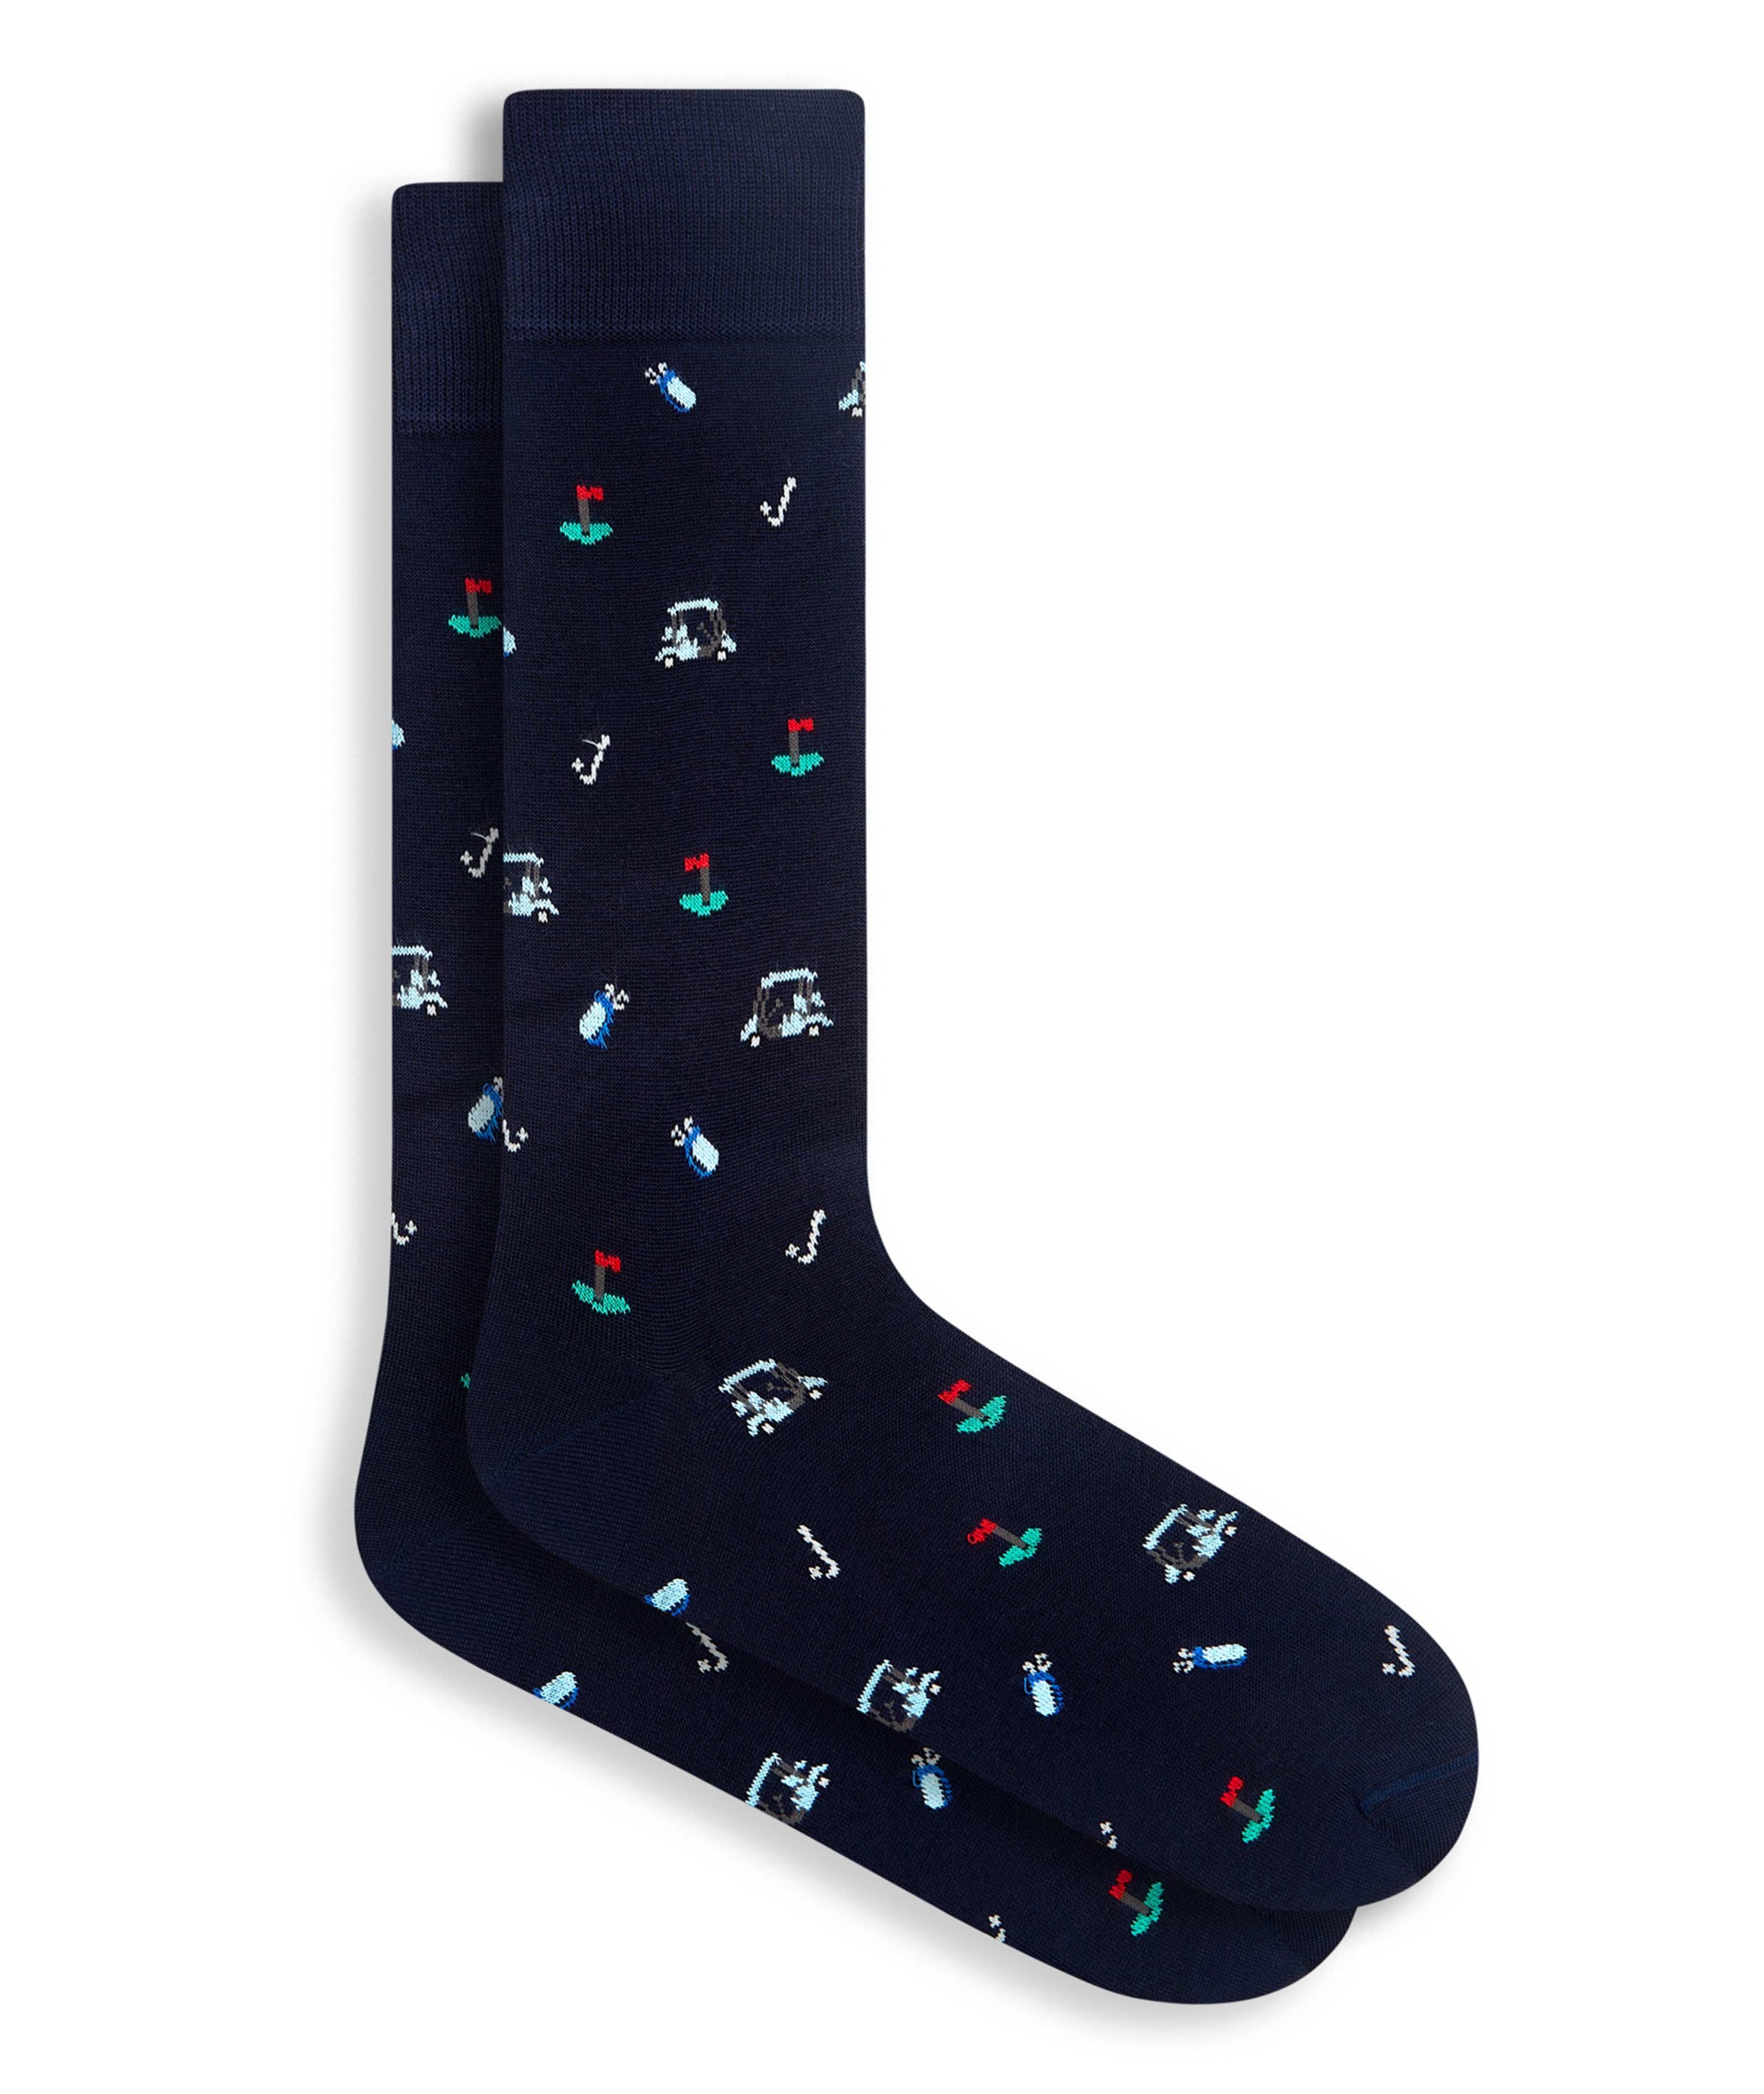 Golf Printed Cotton-Blend Socks image 0